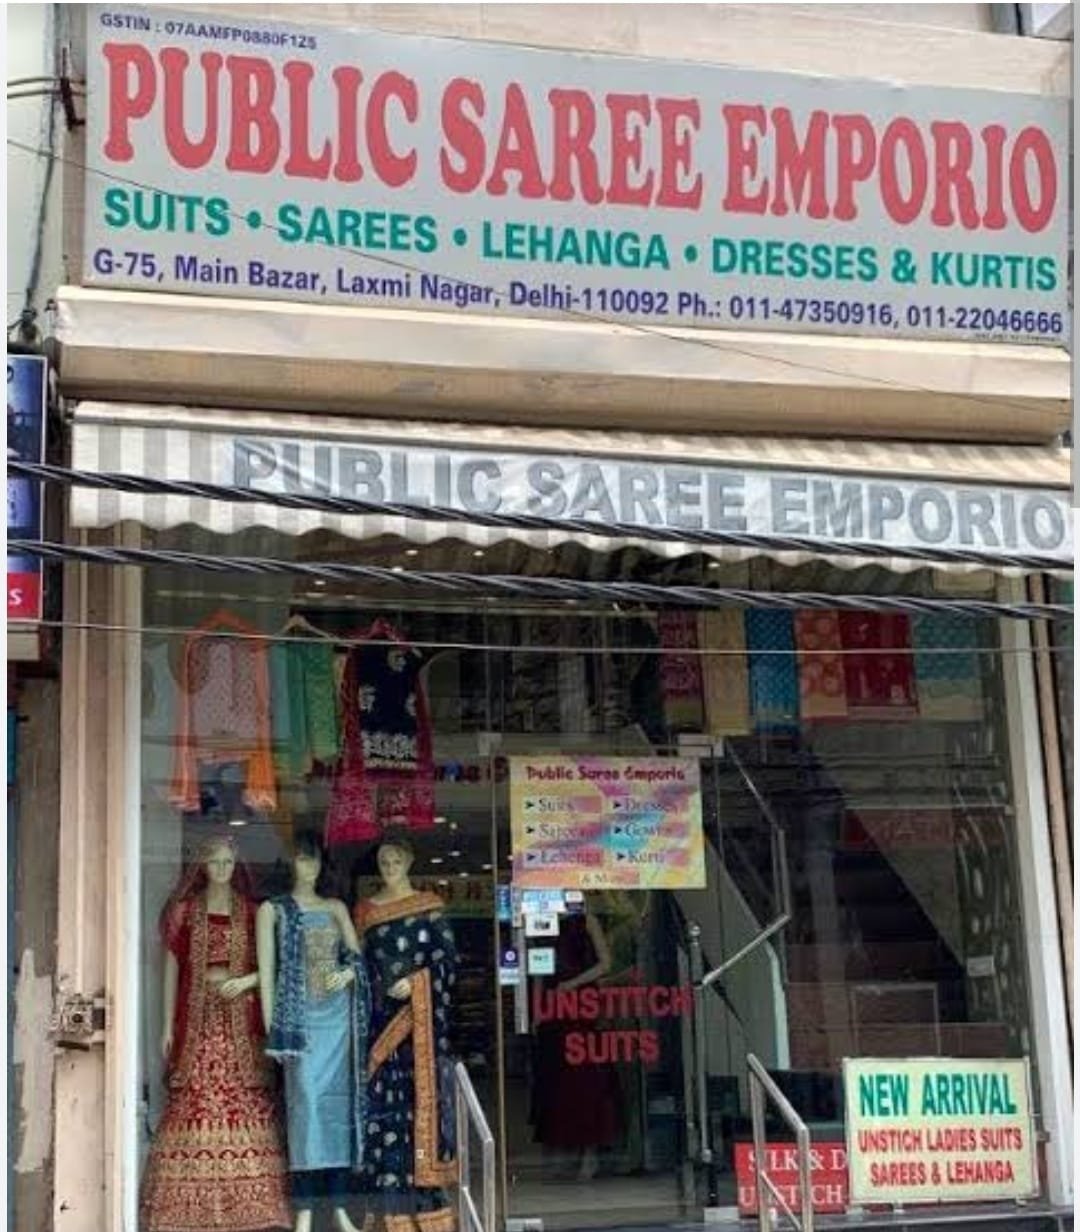 Public Saree Emporio